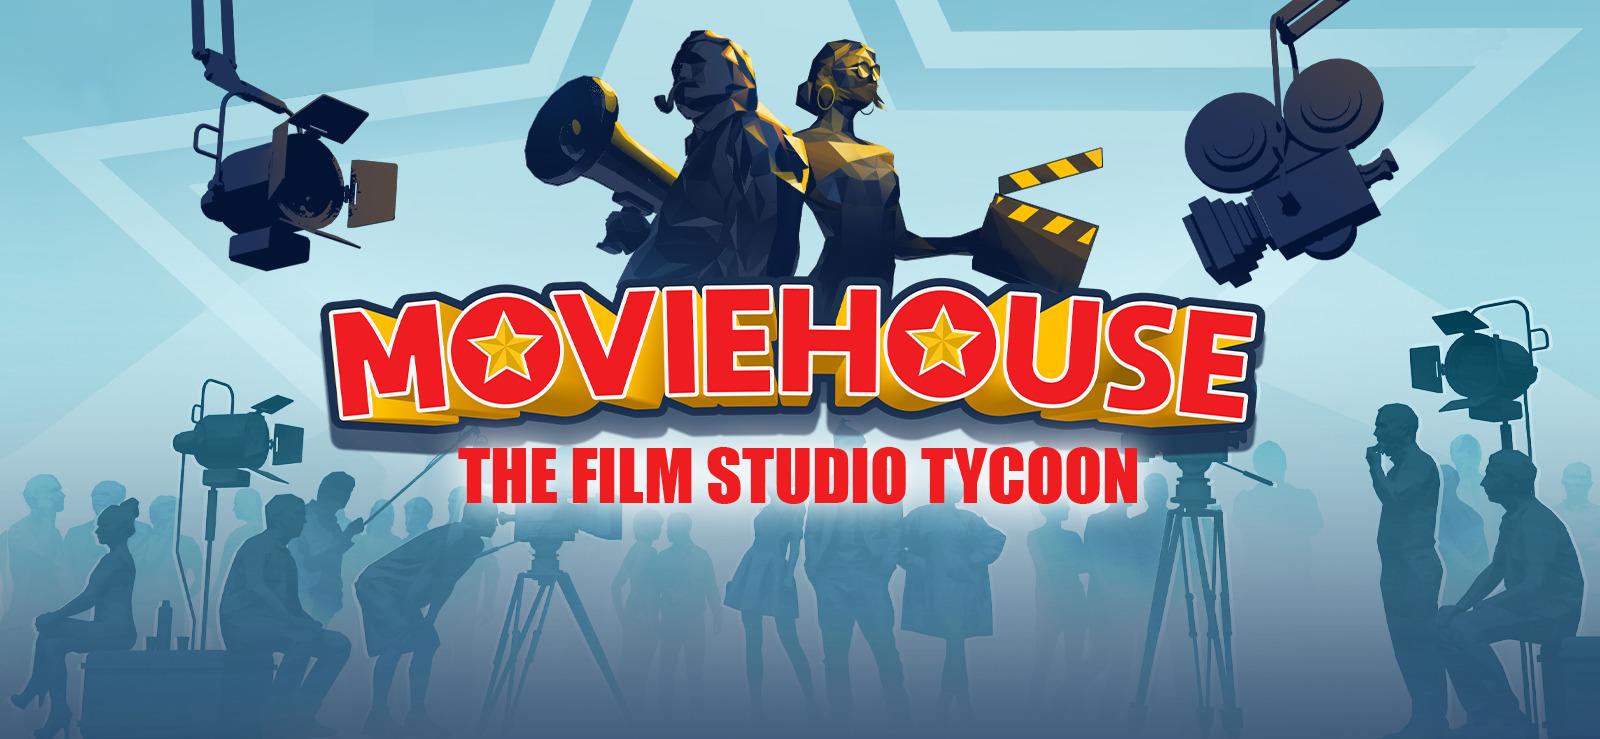 Moviehouse   The Film Studio Tycoon on GOGcom